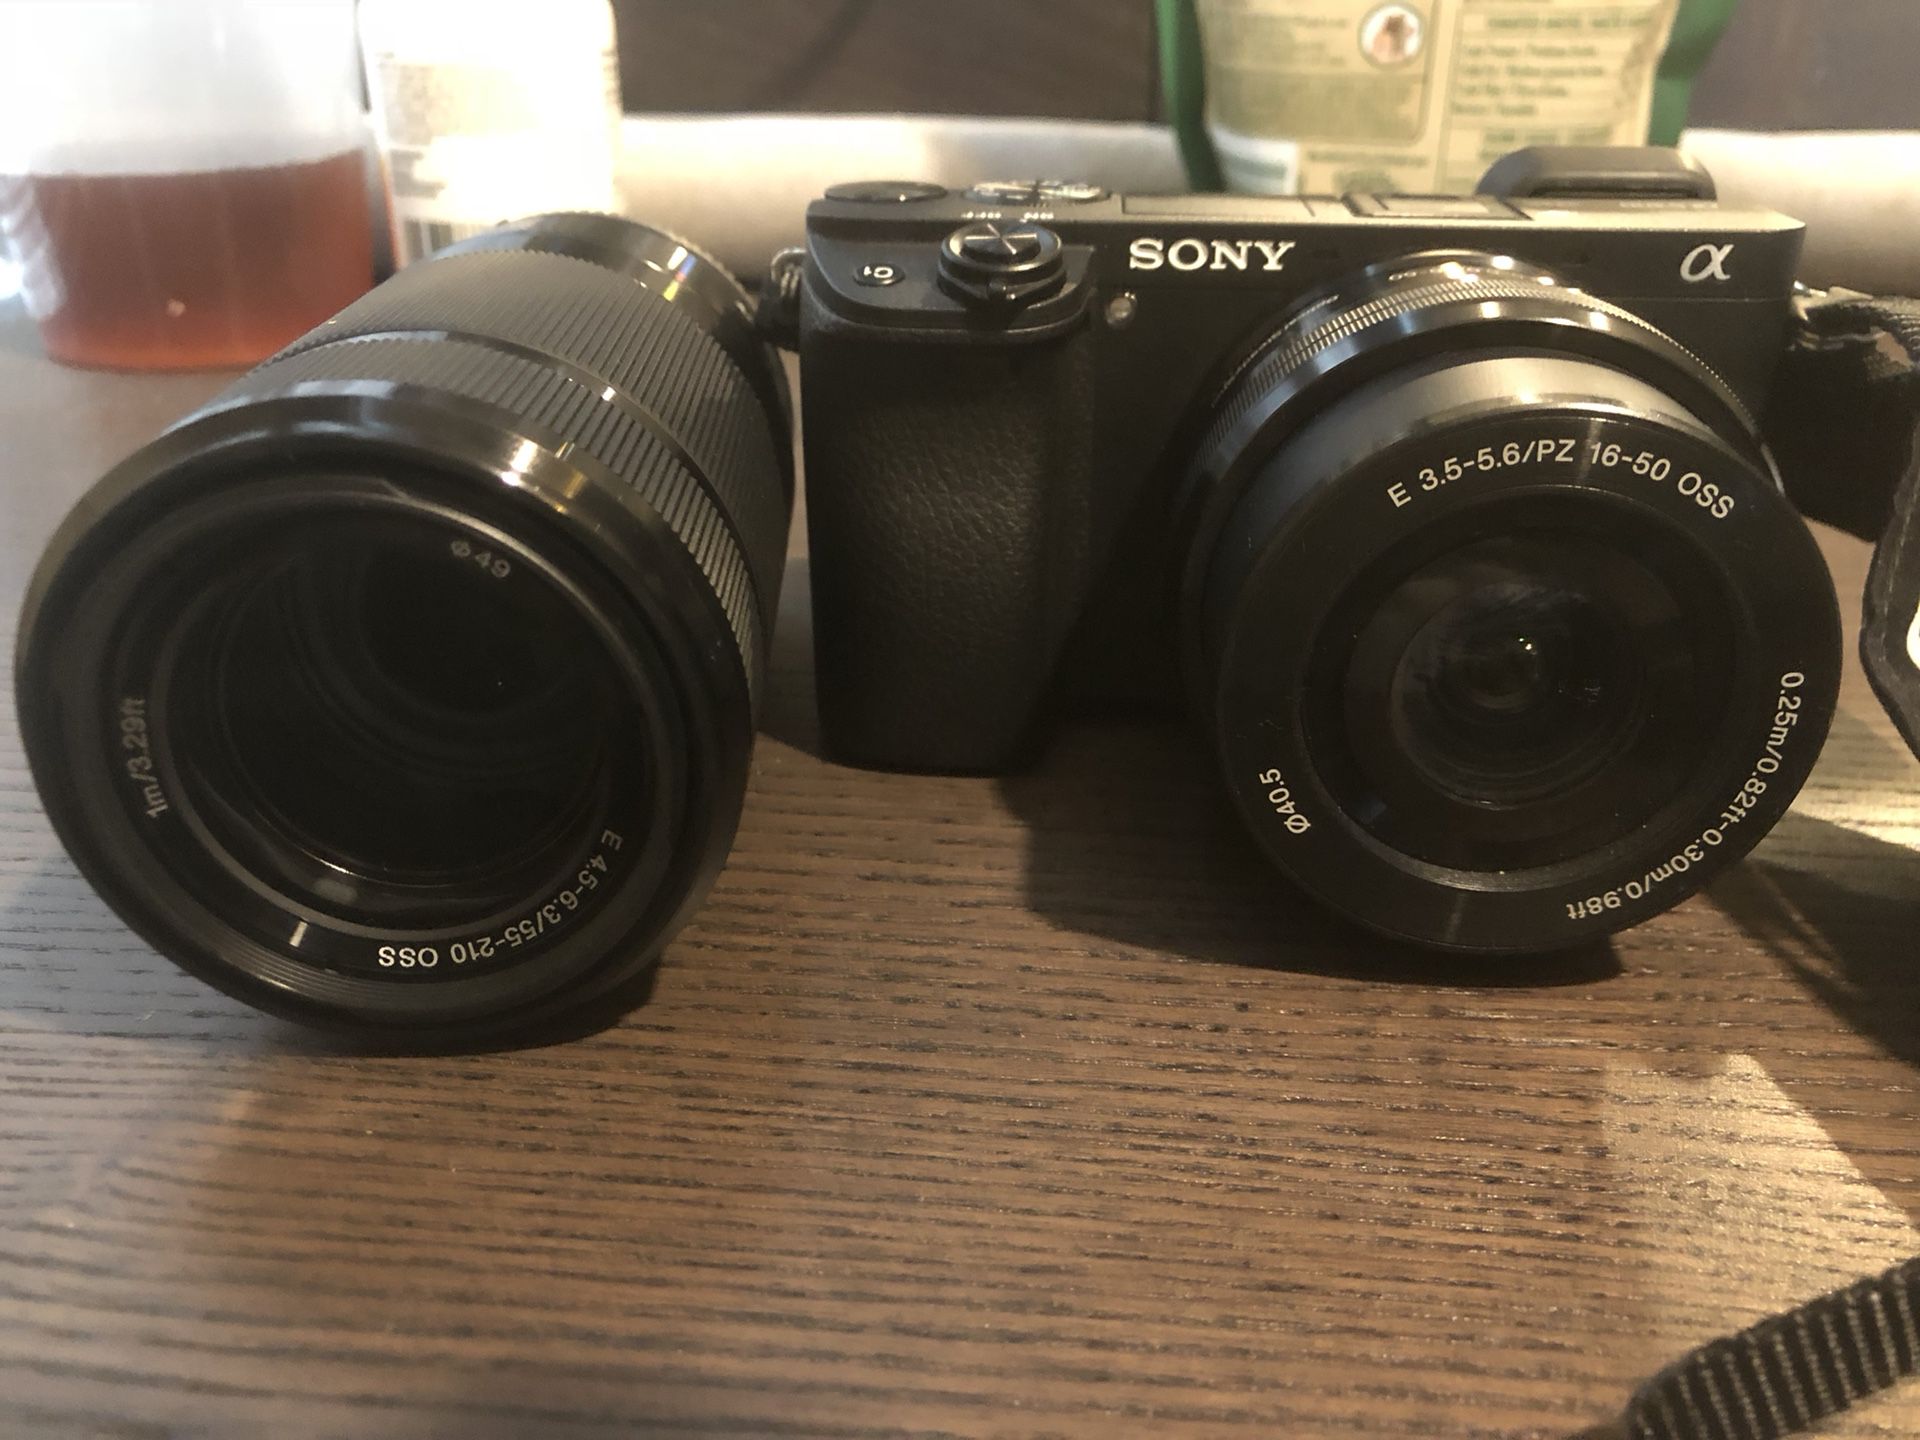 Sony Alpha a6300 Mirrorless Digital Camera with 16-50mm Lens Black Kits, APS C, 24 Megapixels, 4K, Features Hot Shoe Mic Input Swivel/Tilt LCD